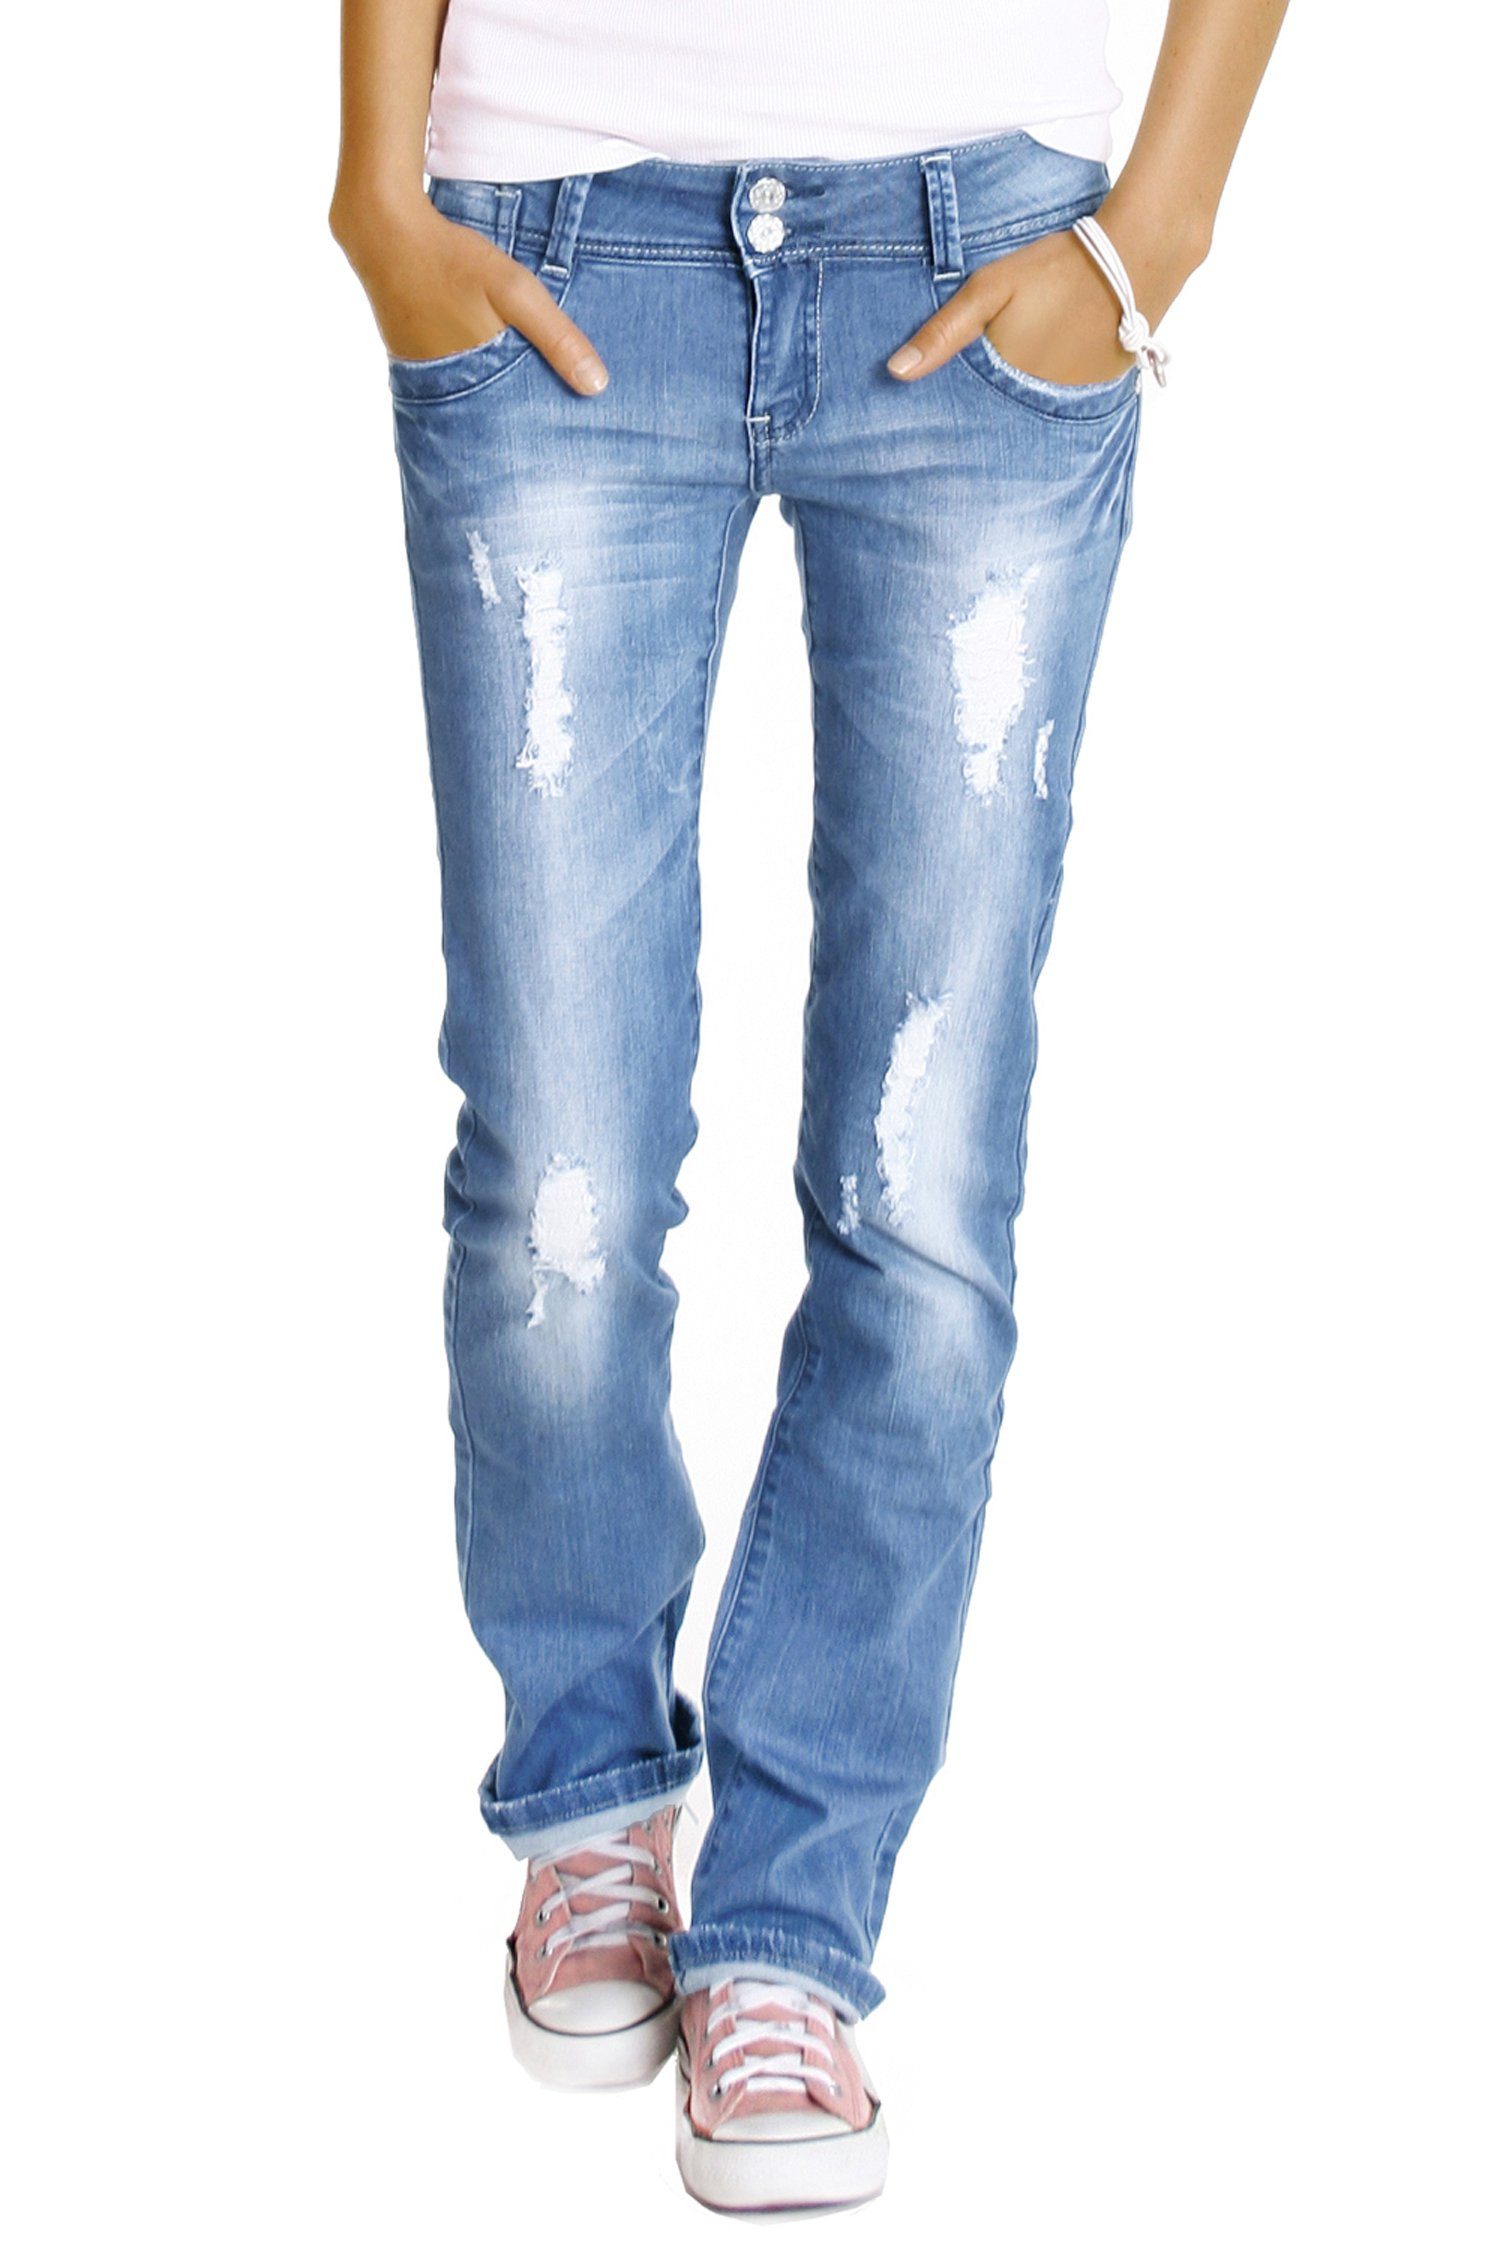 be styled Bootcut-Jeans Hüftjeans destroyed Bootcut Джинси Hose zerrissen gerades bein - j28x mit Stretch-Anteil, 5-Pocket-Style